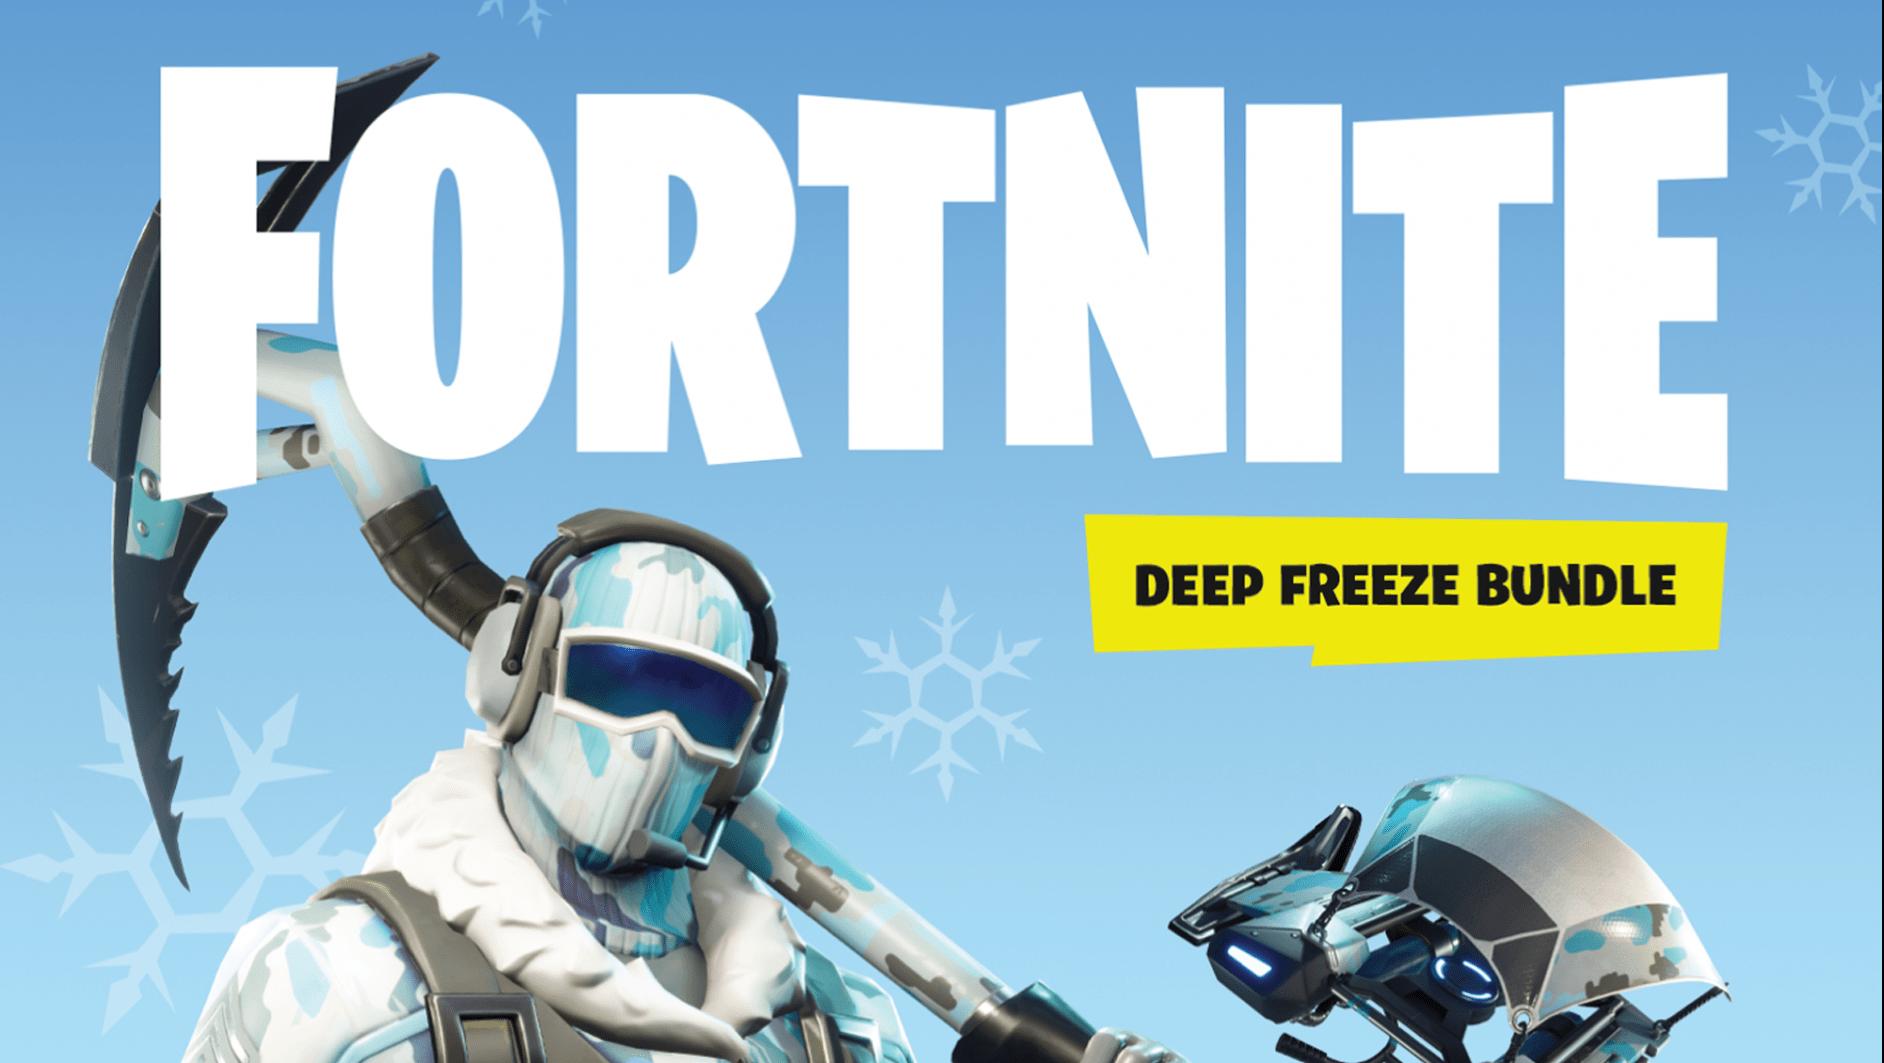 Fortnite: Deep Freeze Bundle